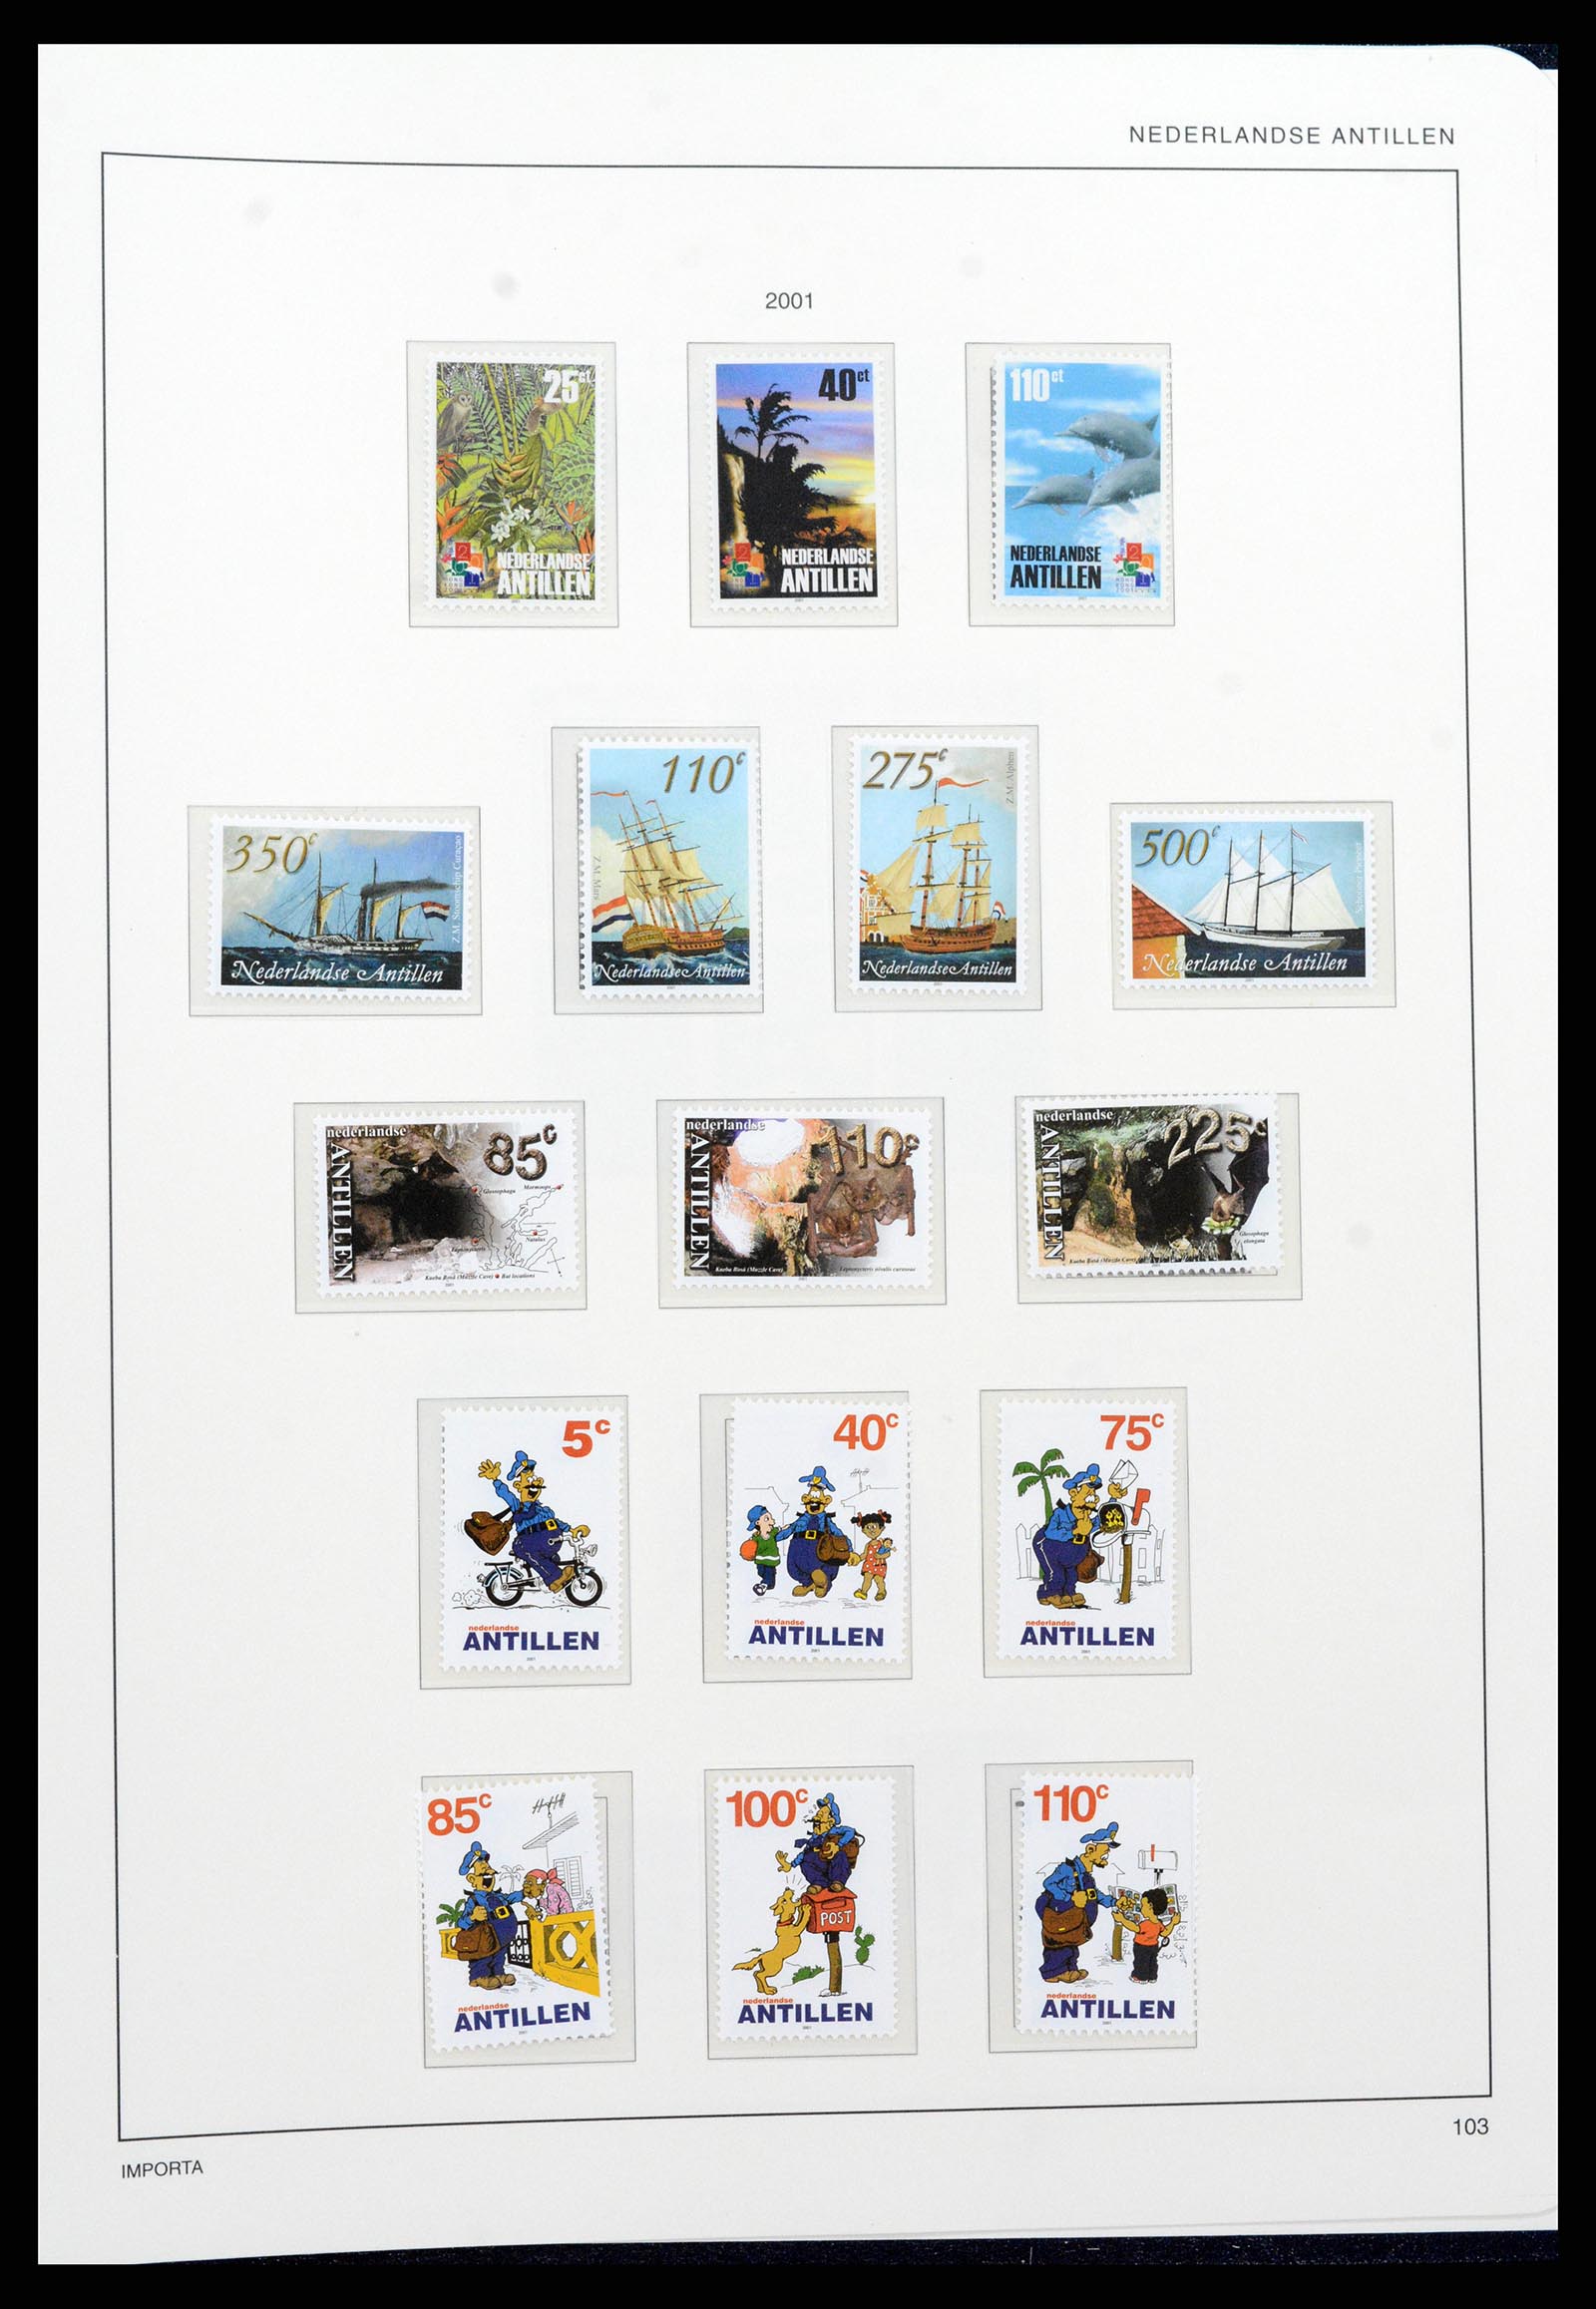 37693 105 - Stamp collection 37693 Netherlands Antilles 1949-2001.